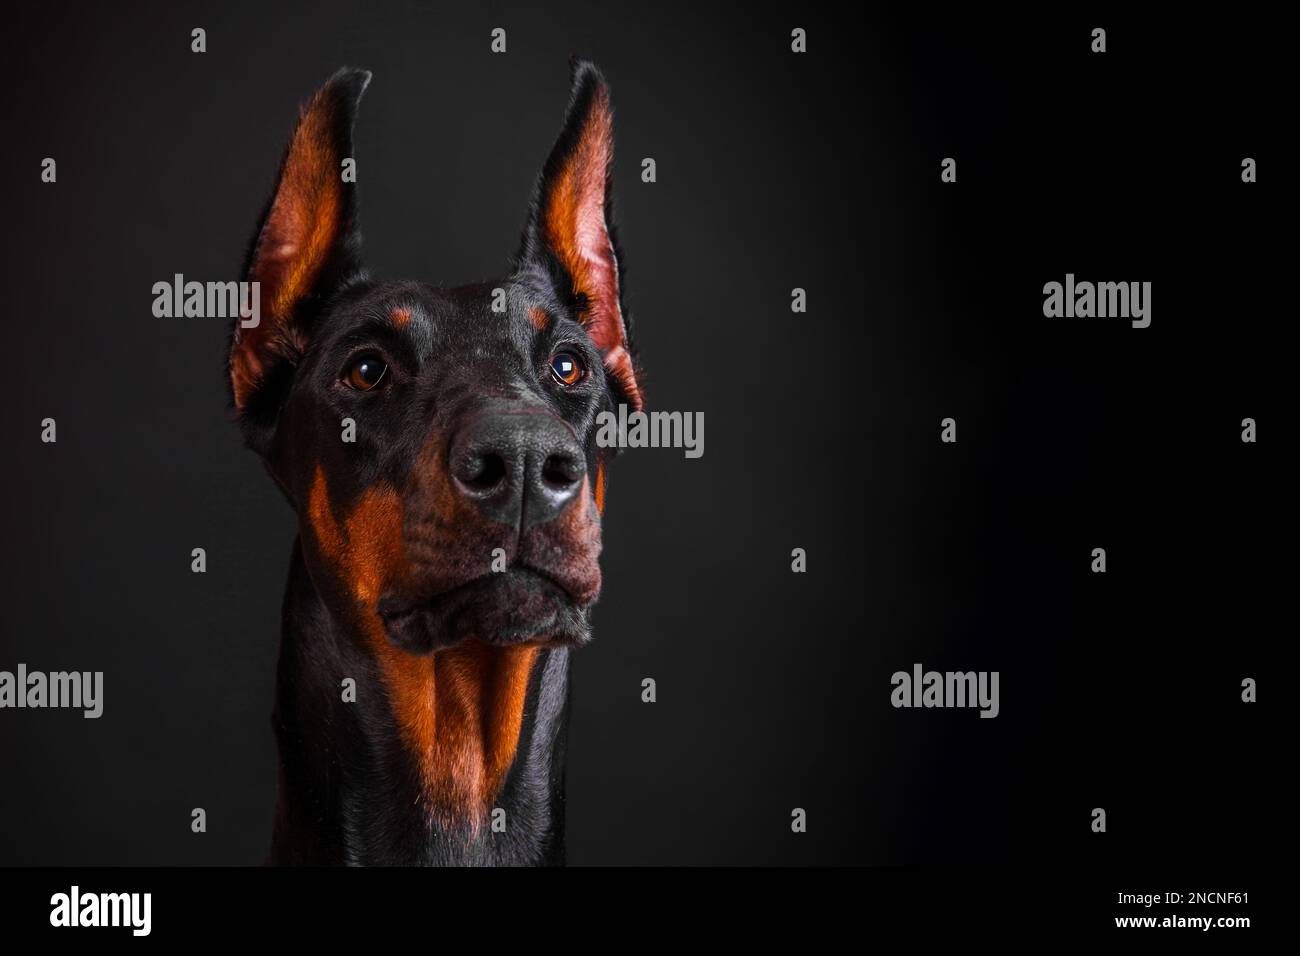 doberman dog close-up on a dark background Stock Photo